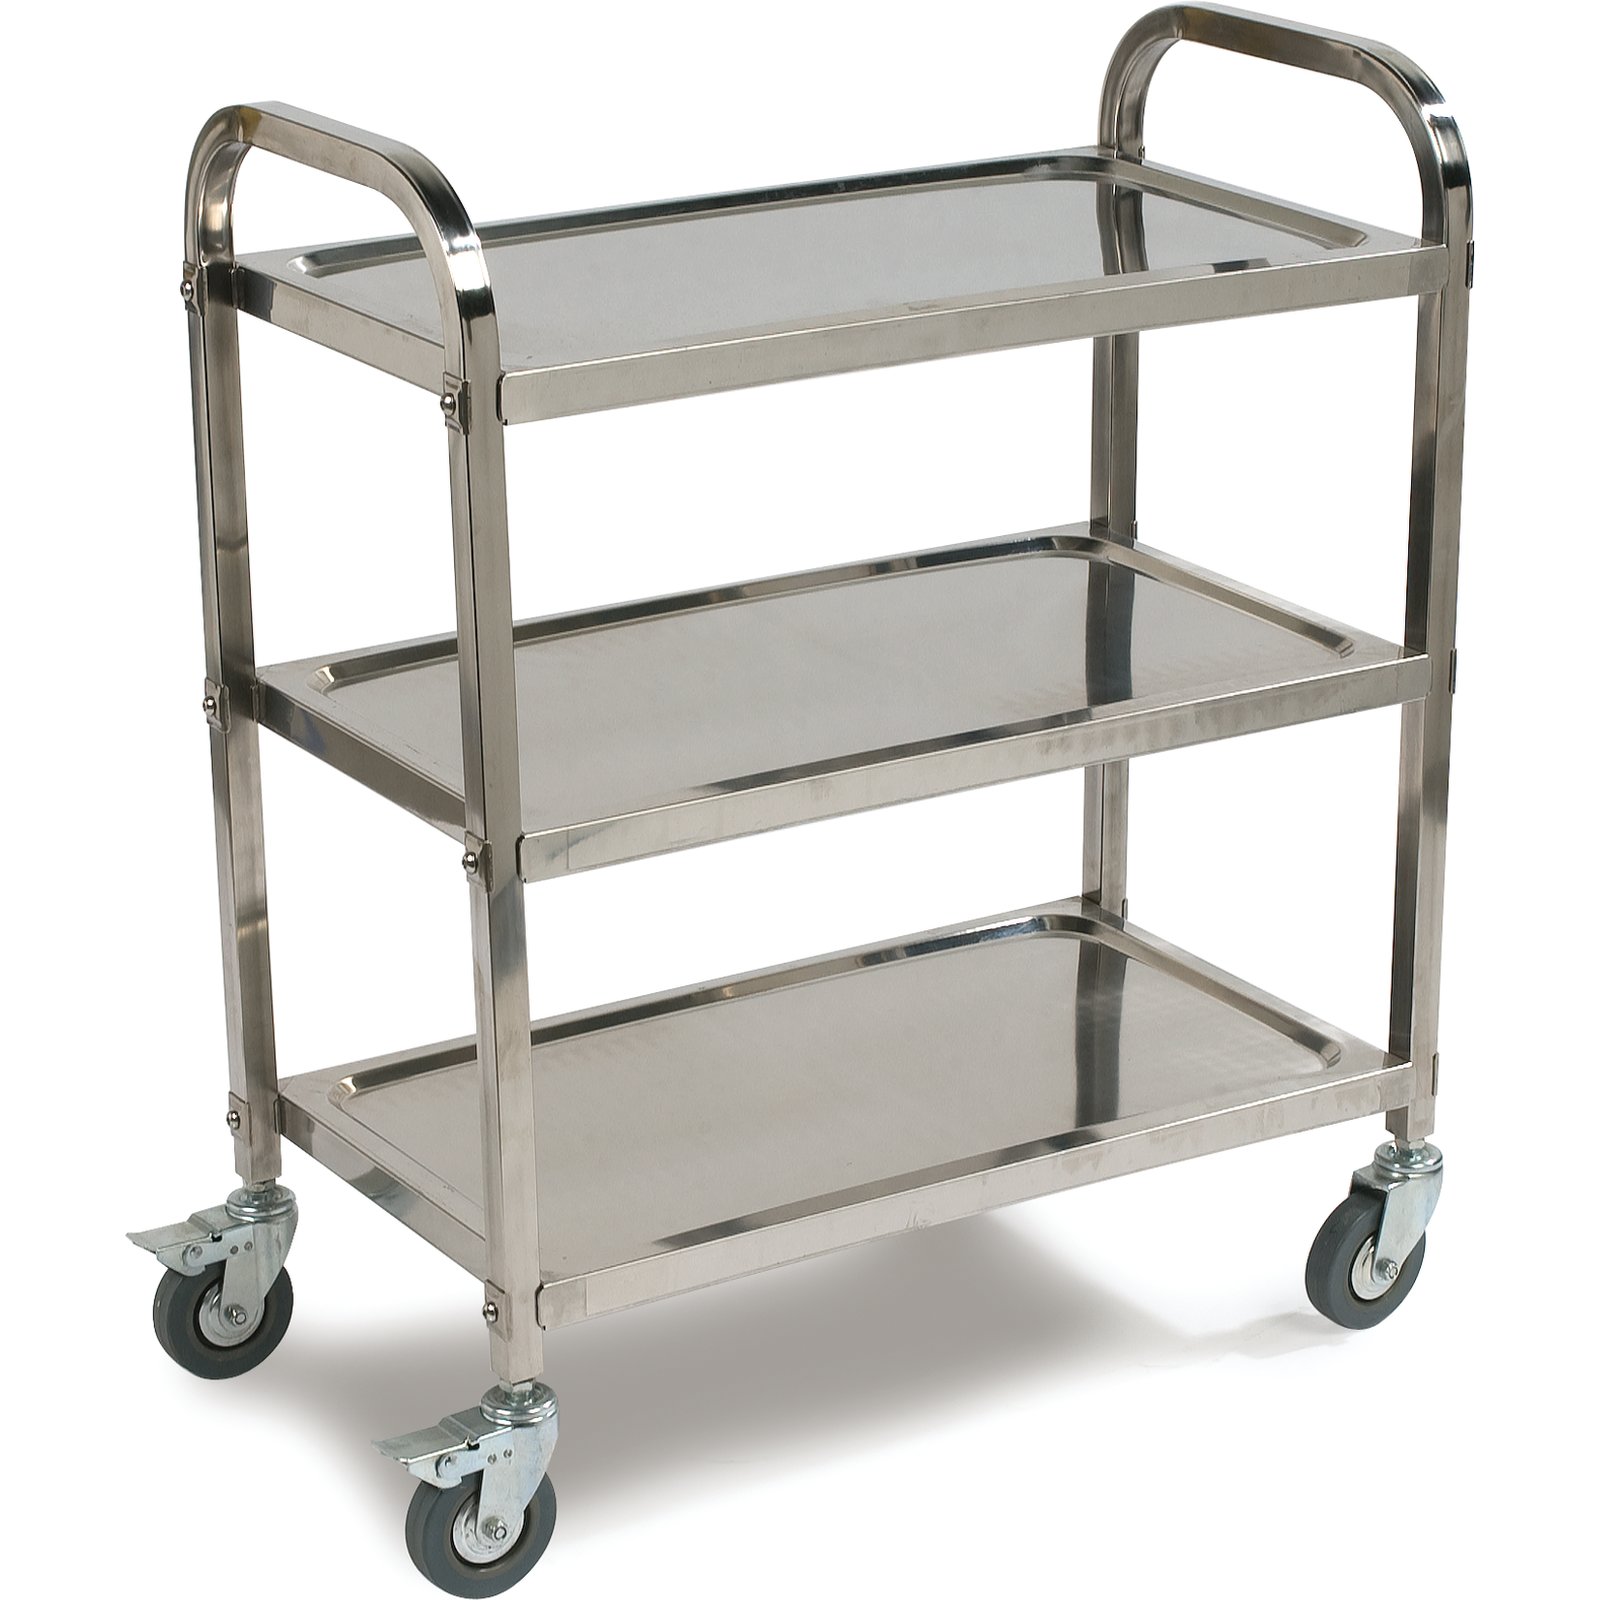 UC7032133 - Stainless Steel 3 Shelf Utility Cart 21 x 33